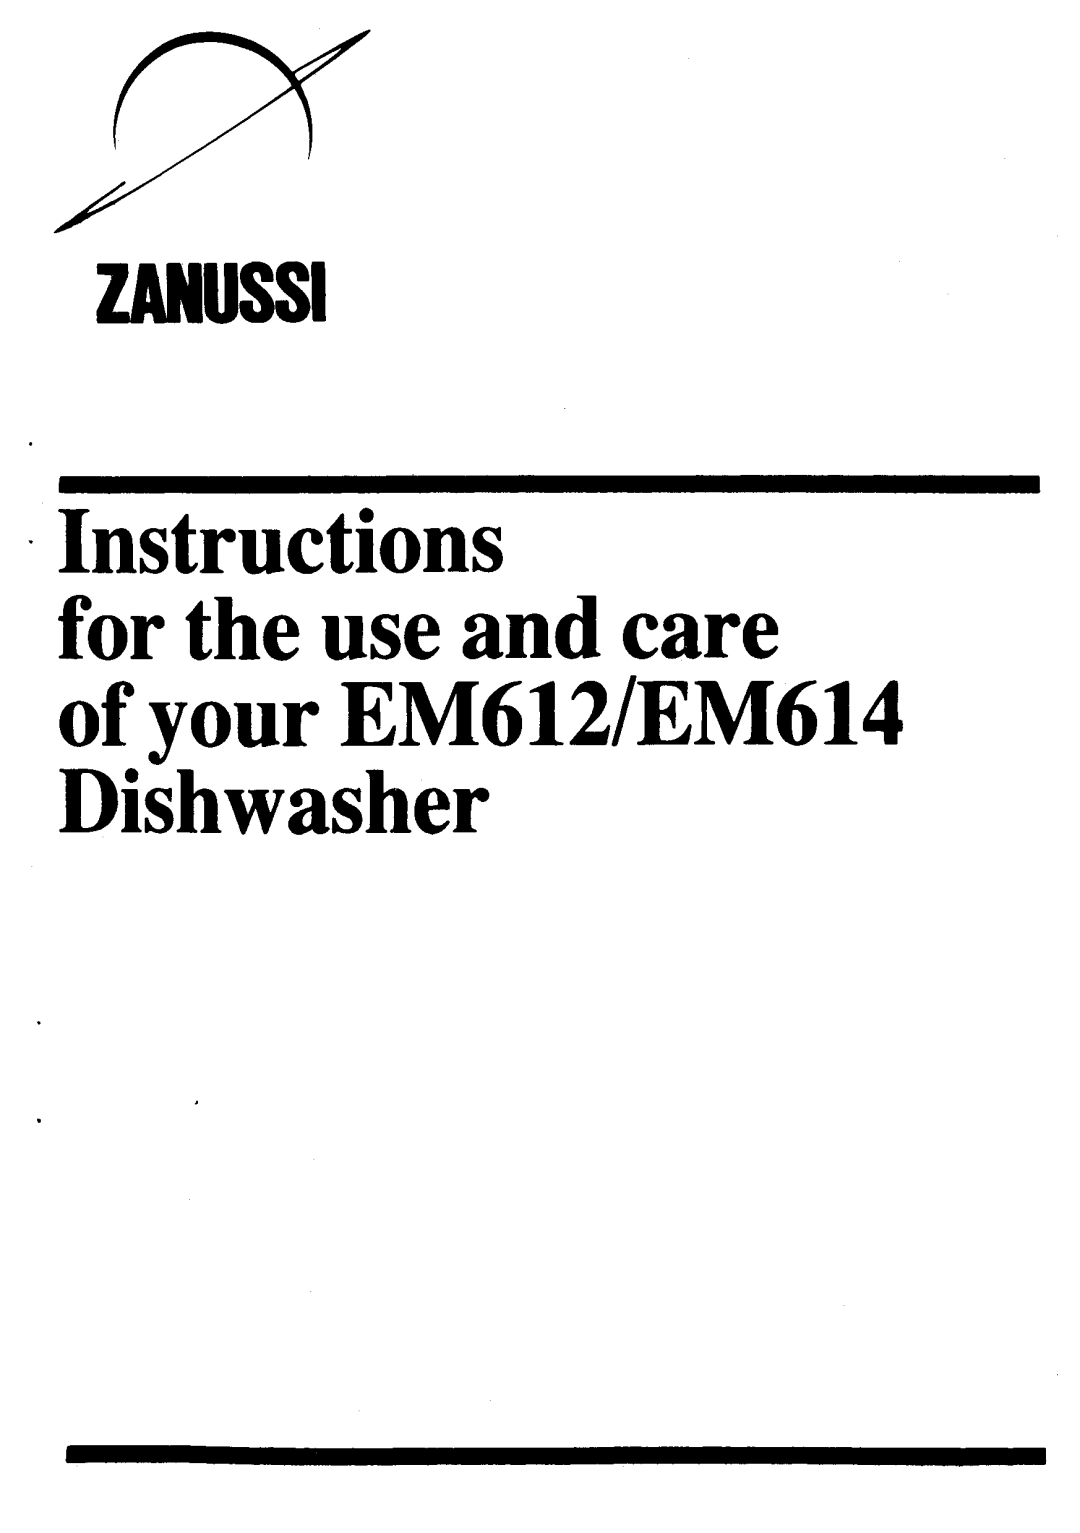 Zanussi EM614, EM612 manual 